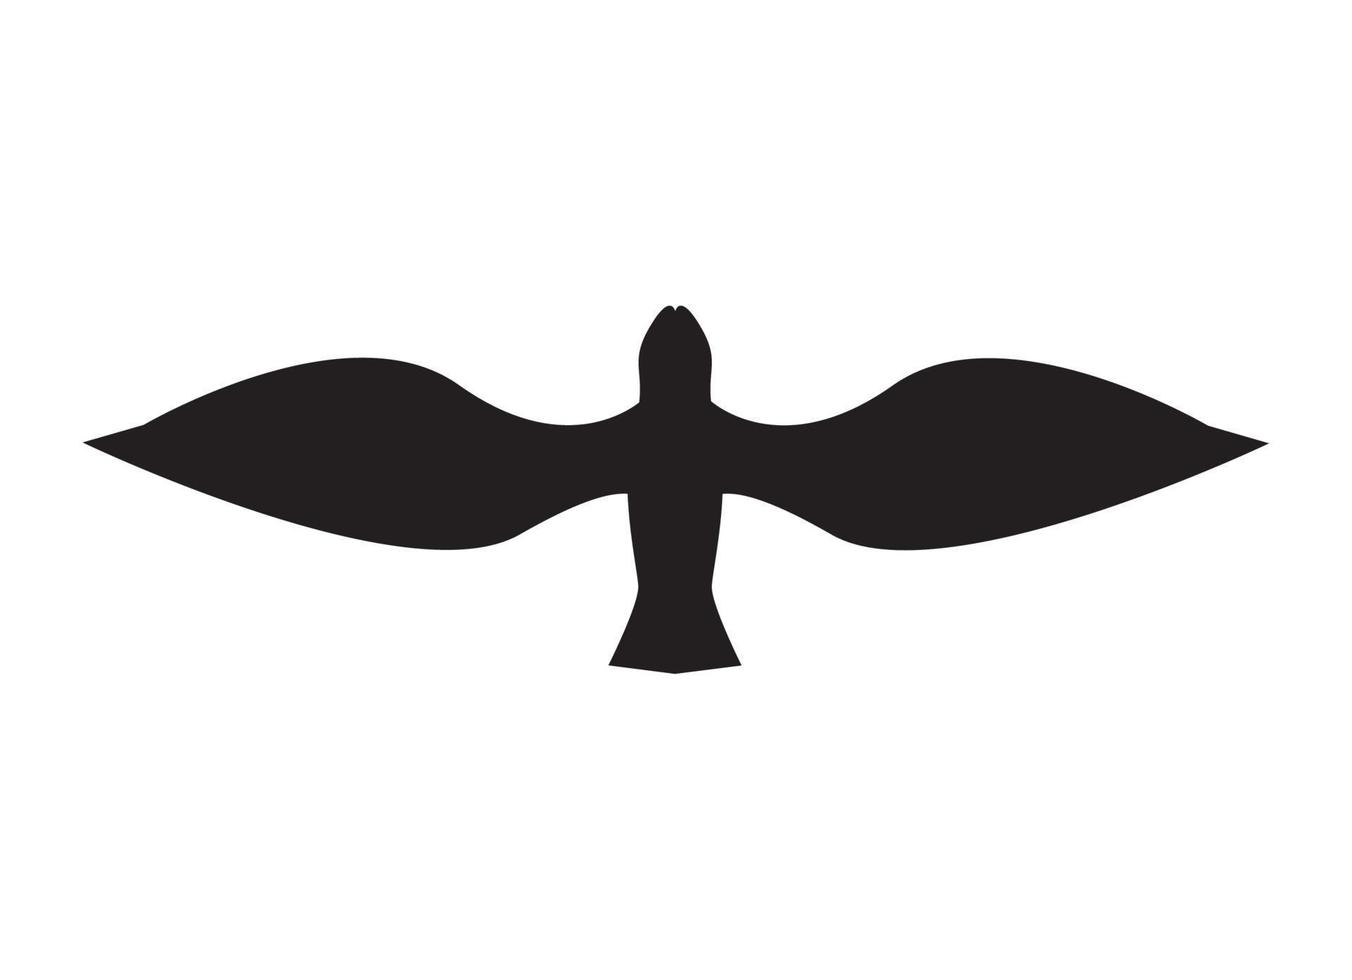 seagull flying silhouette vector